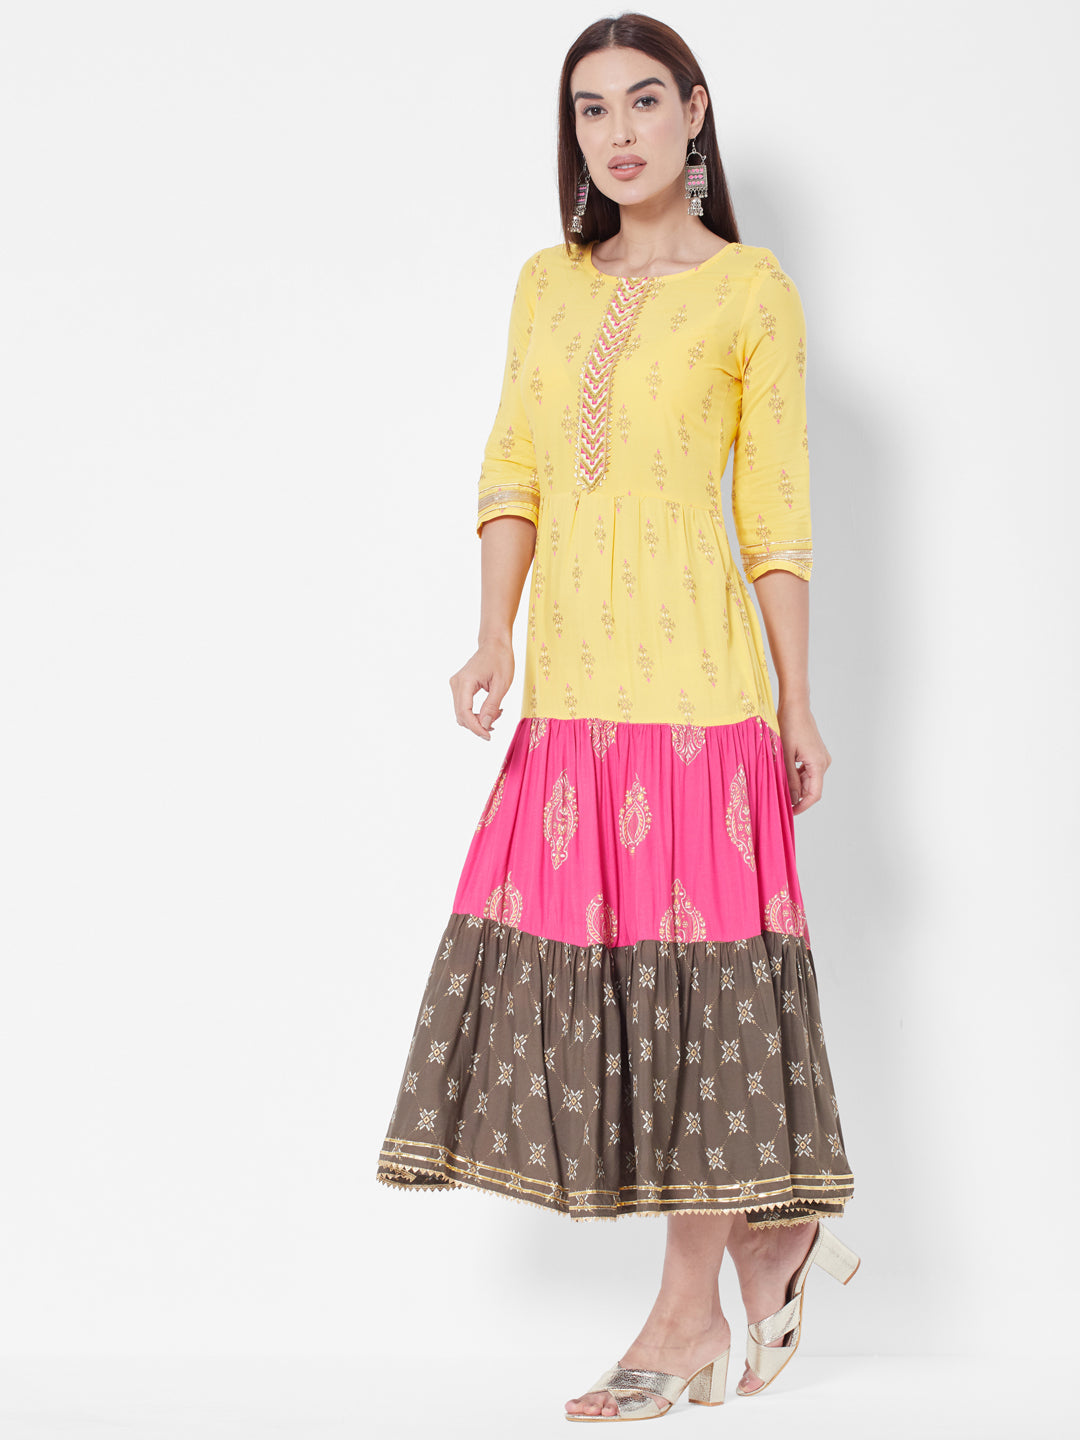 Vedic Ethnic Motifs Ethnic A-Line Tiered Midi Dress